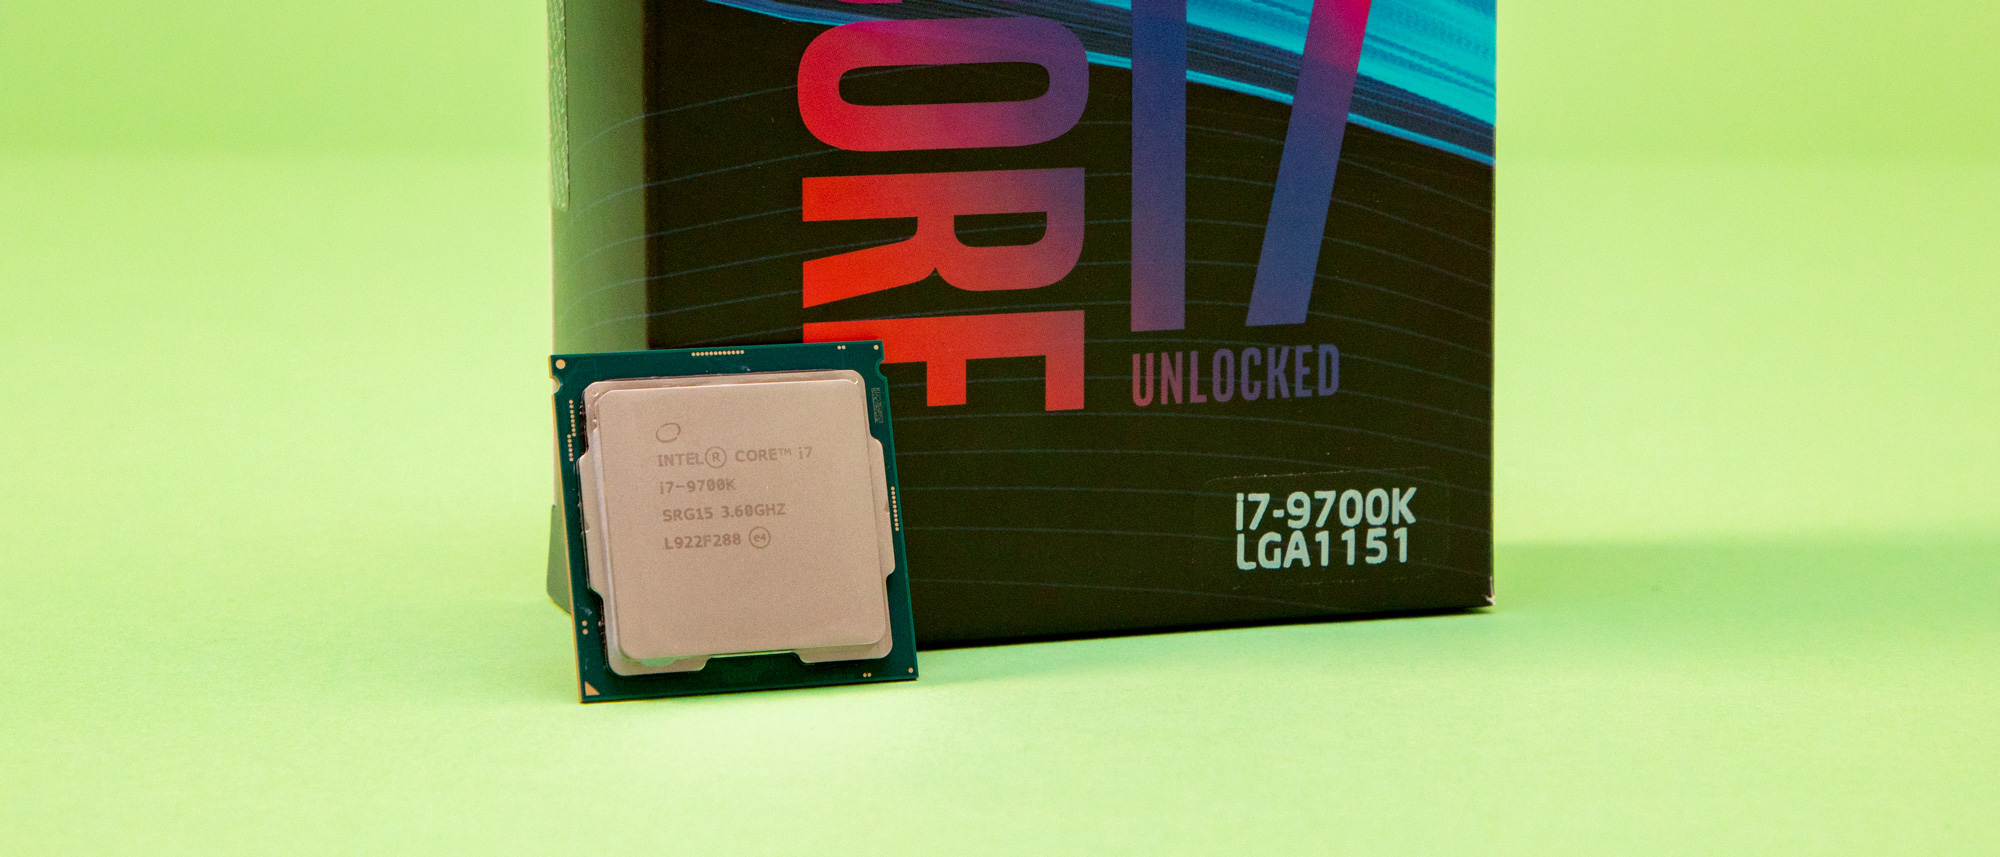 Intel Core i7-9700K | TechRadar